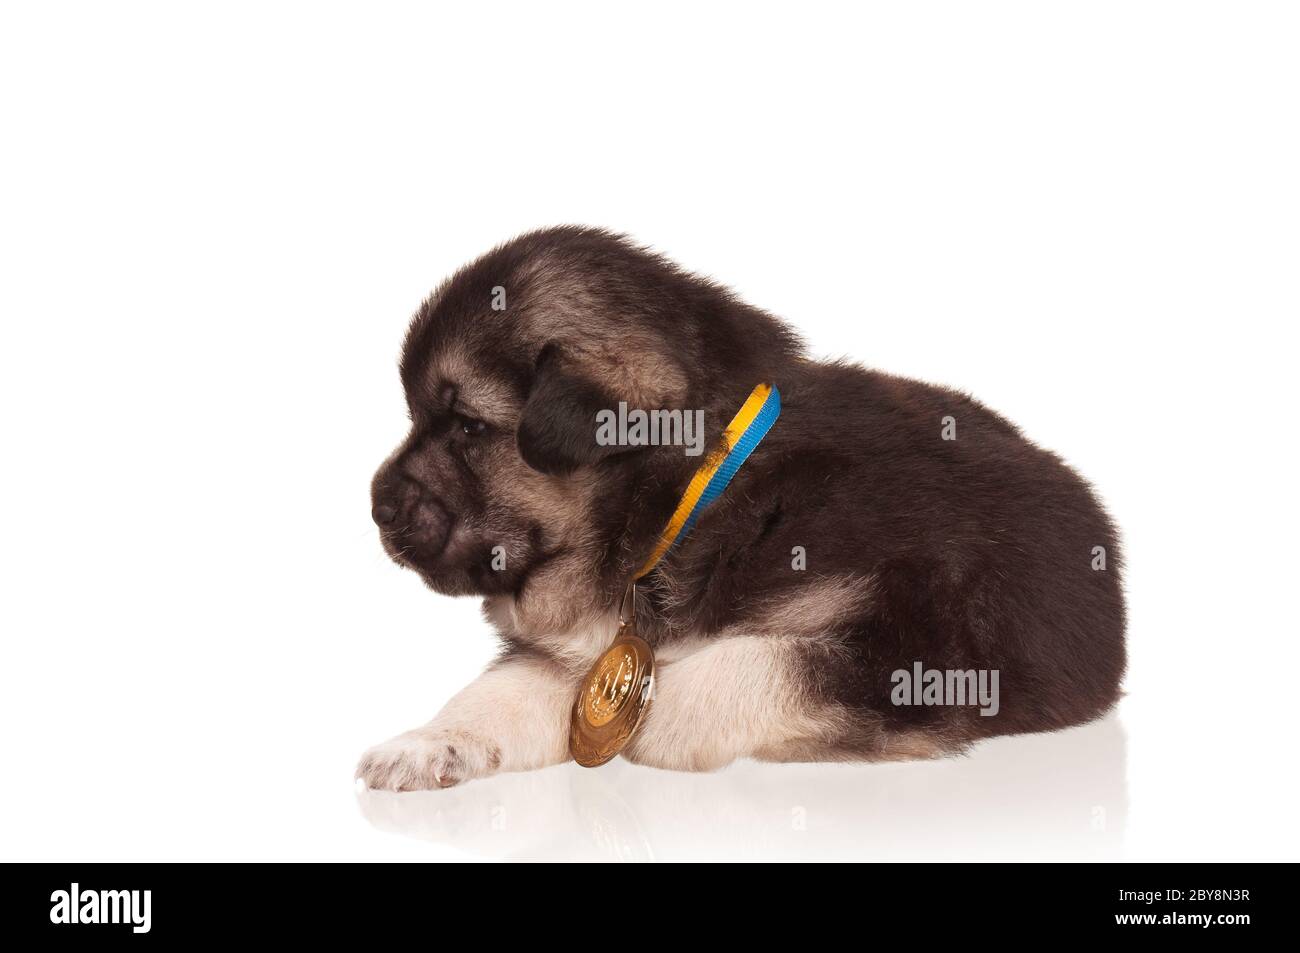 Cute puppy Stock Photo